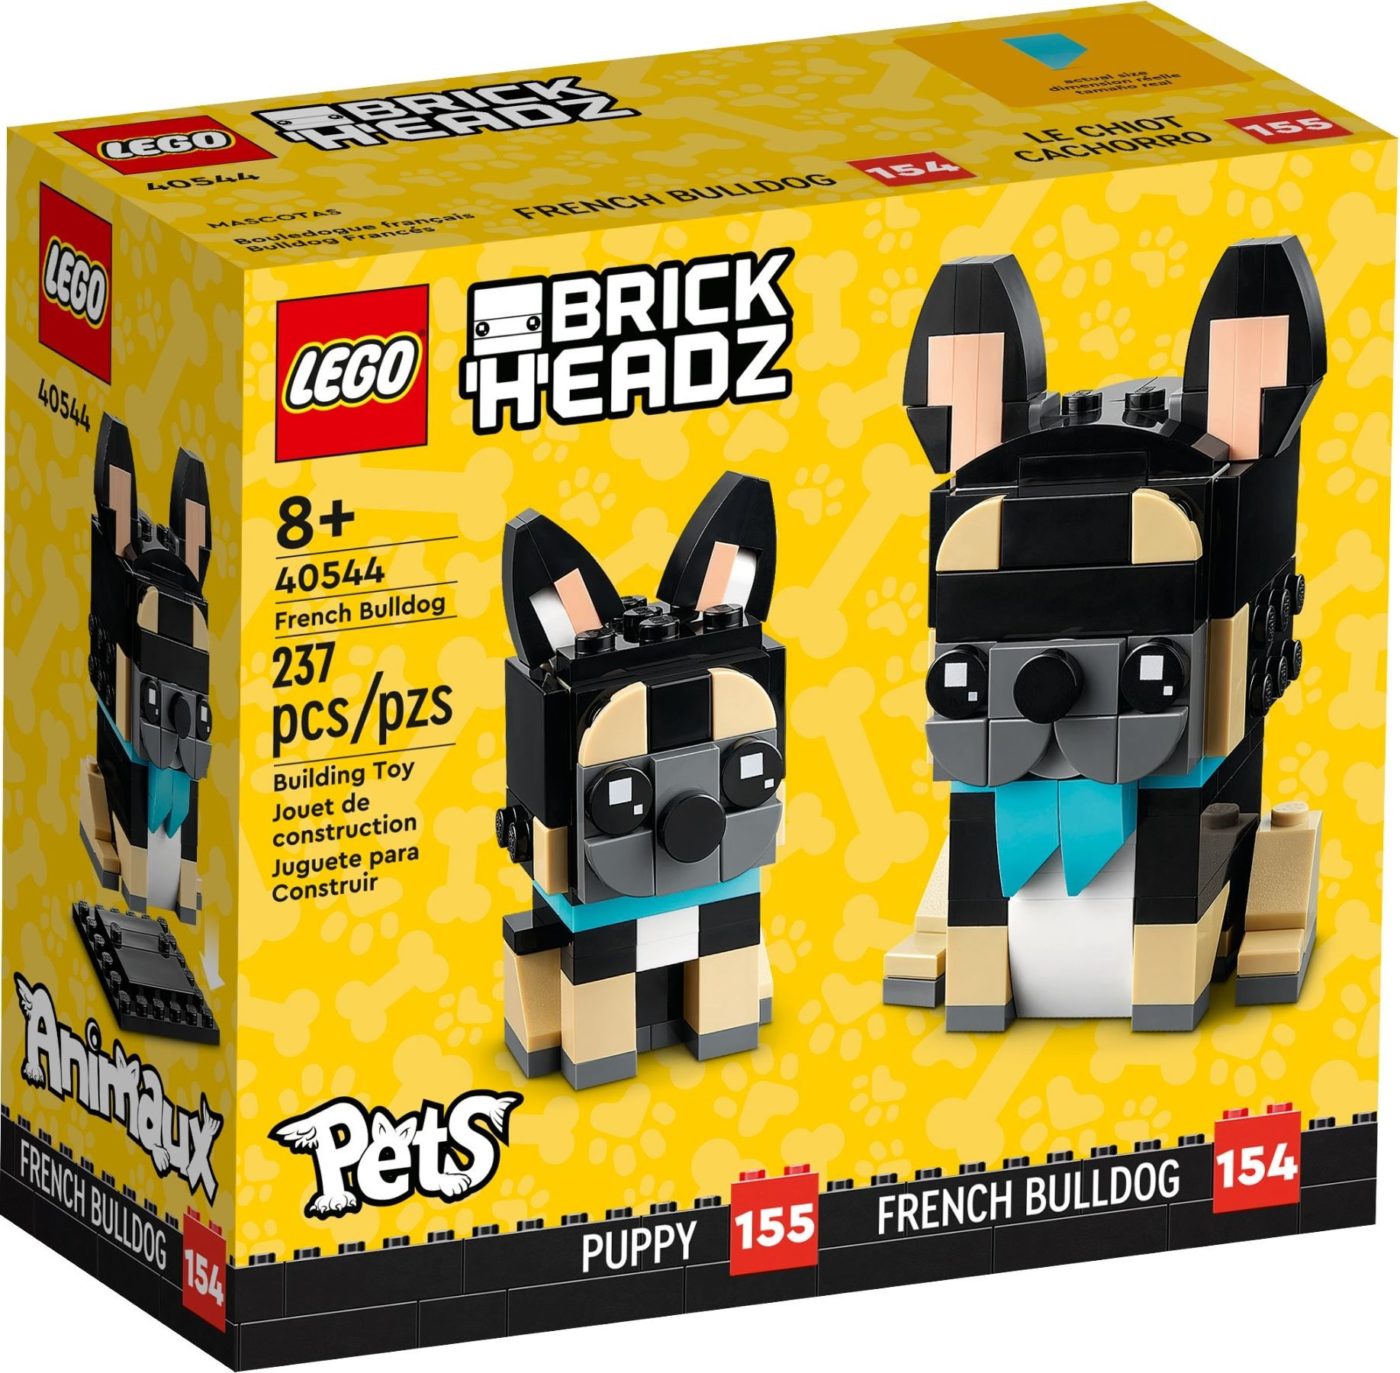 40544 Brickheadz Pets French Bulldog Box